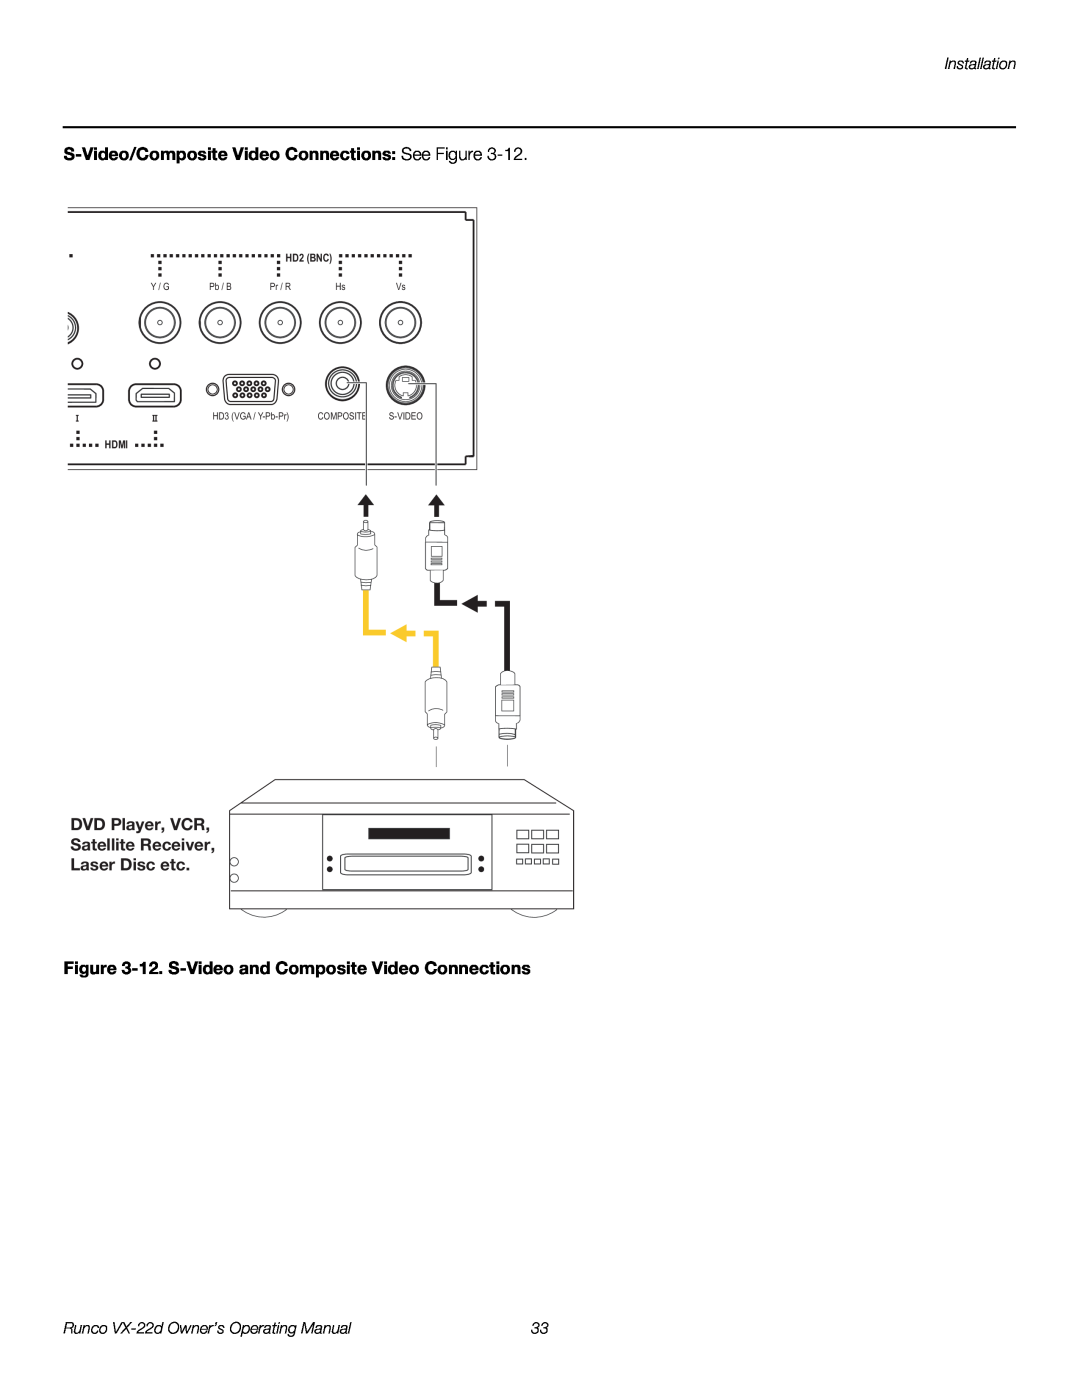 Runco VX-22D S-Video/Composite Video Connections See Figure, DVD Player, VCR Satellite Receiver Laser Disc etc, HD2 BNC 